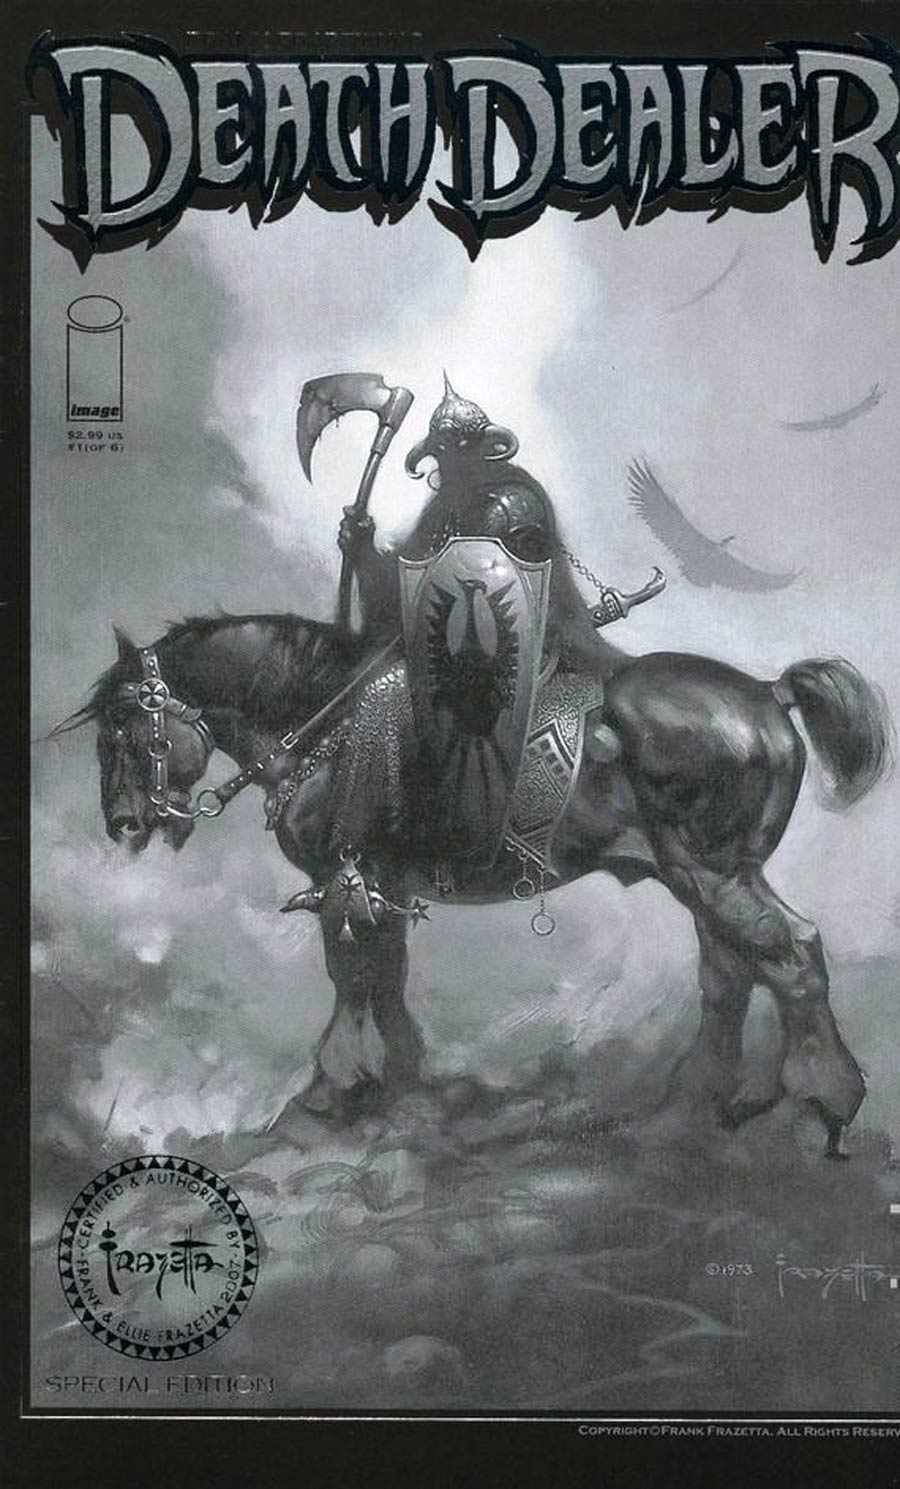 Frank Frazettas Death Dealer #1 Cover F Black & White Special Edition